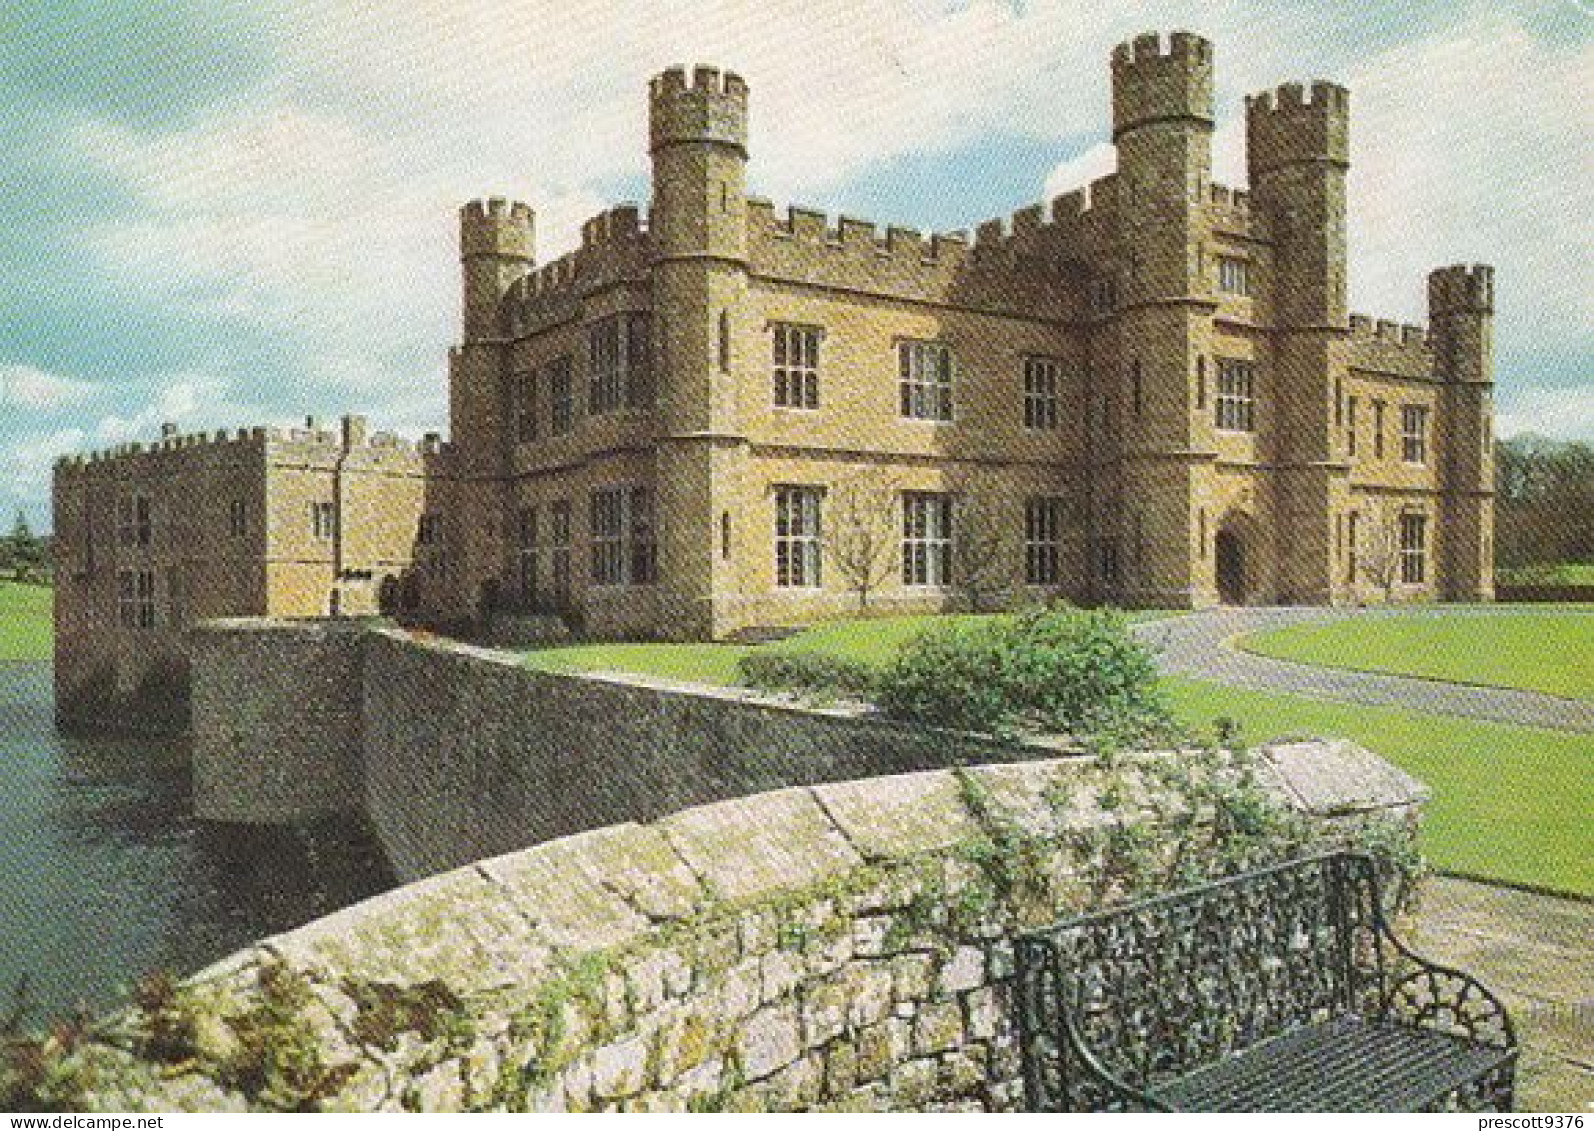 Leeds Castle, Maidstone - Kent - , UK   -   Unused Postcard   - K1 - Dover